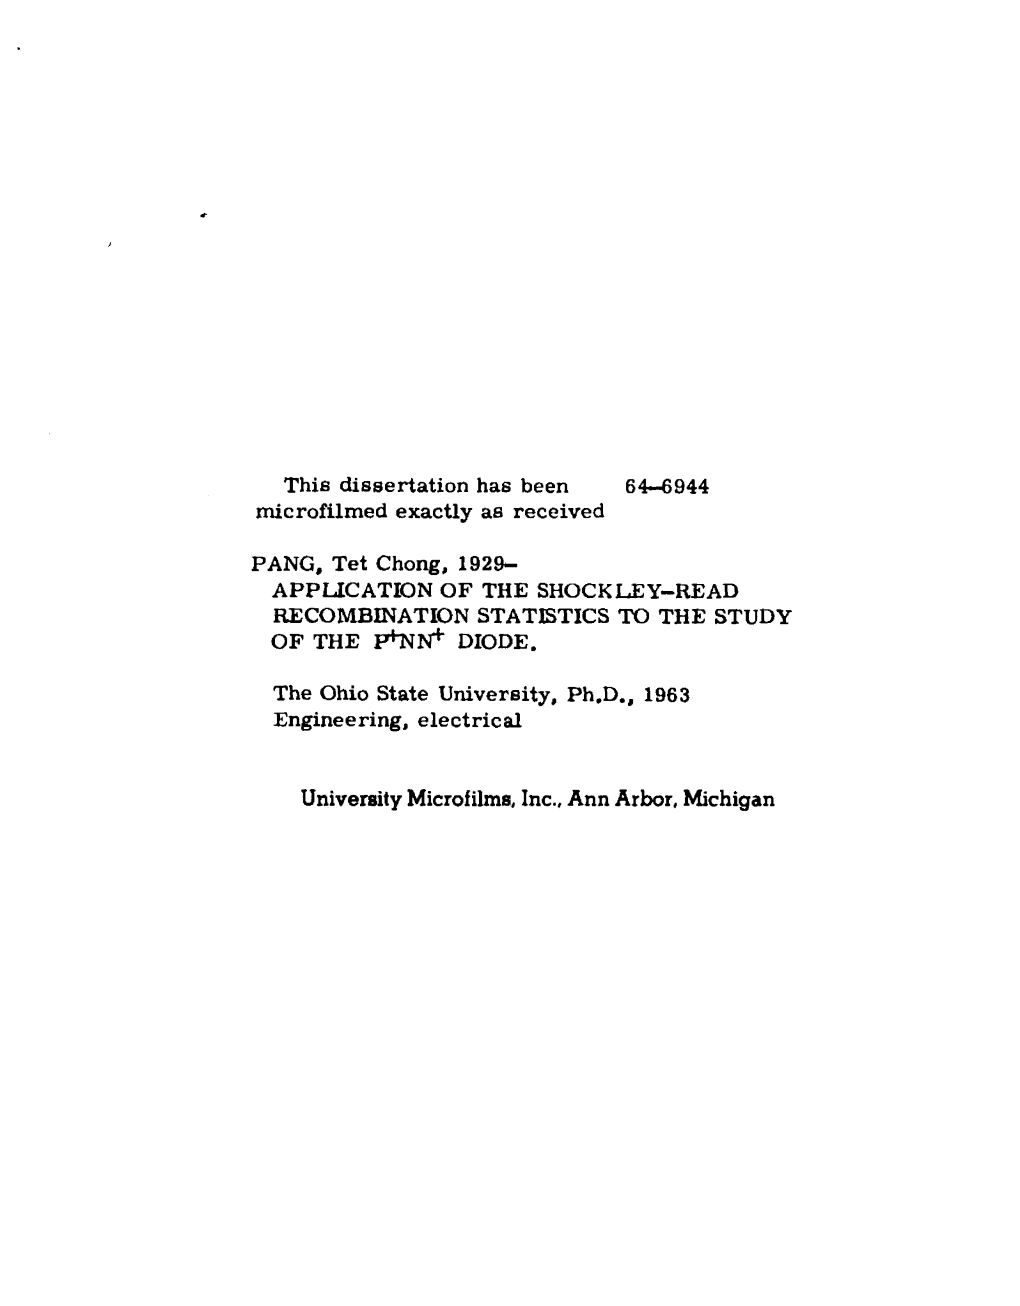 University Microfilms, Inc., Ann Arbor, Michigan APPLICATION of the SHOCKLEY-READ RECOMBINATION